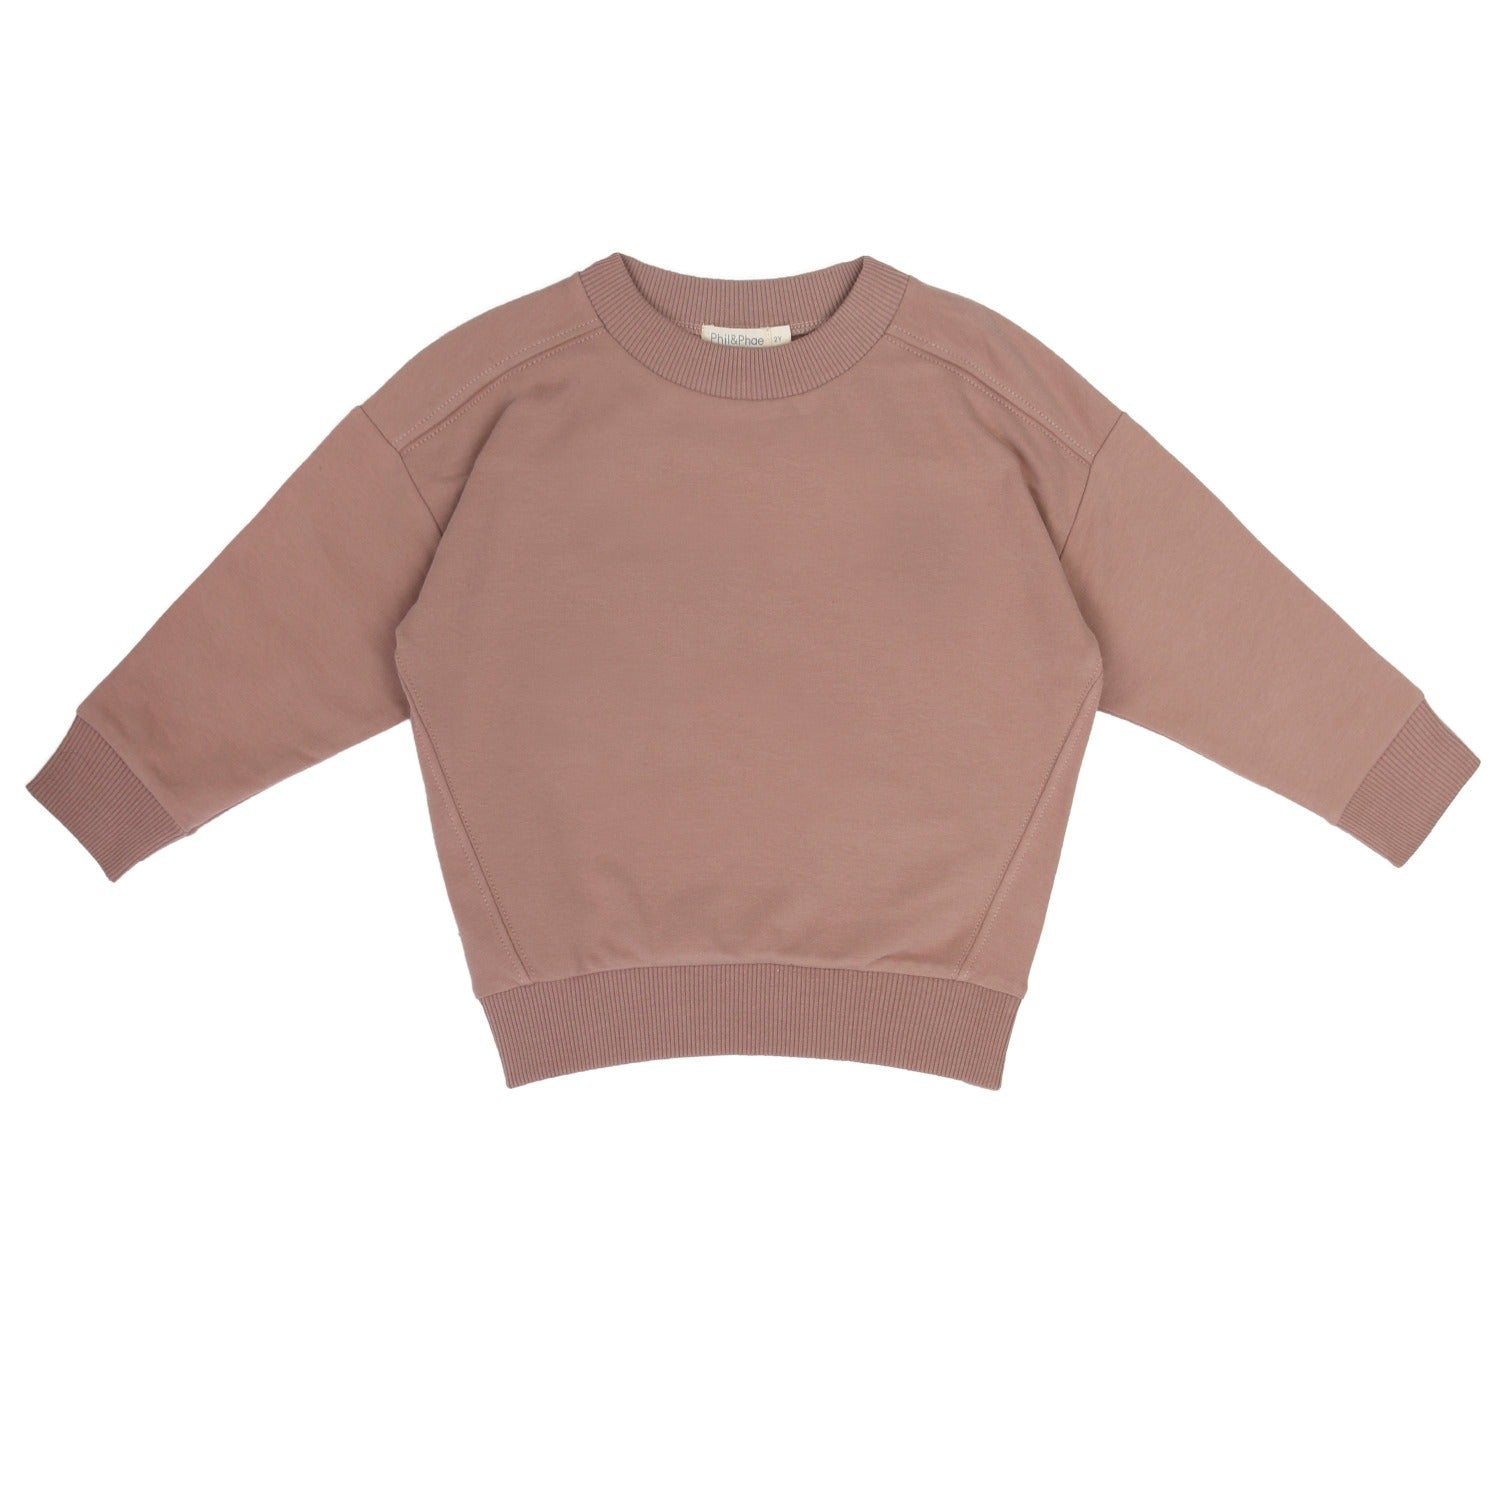 Oversize Sweater, Powder by sustainable kidswear brand Phil&Phae